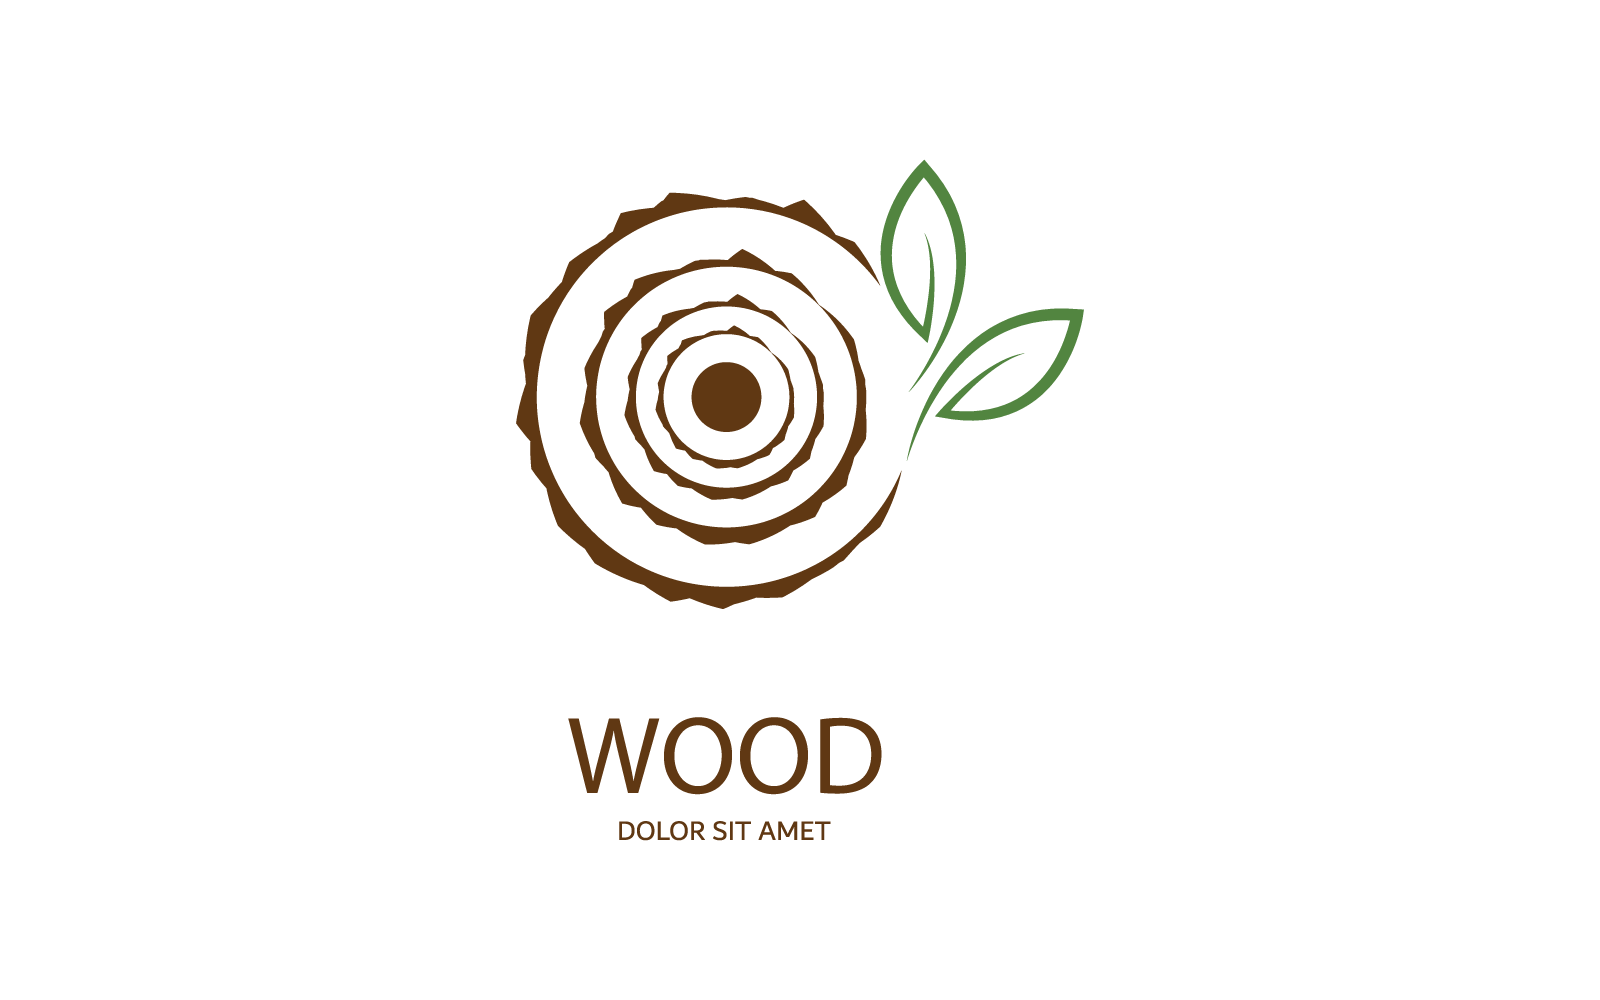 Wood logo vector flat design illustration